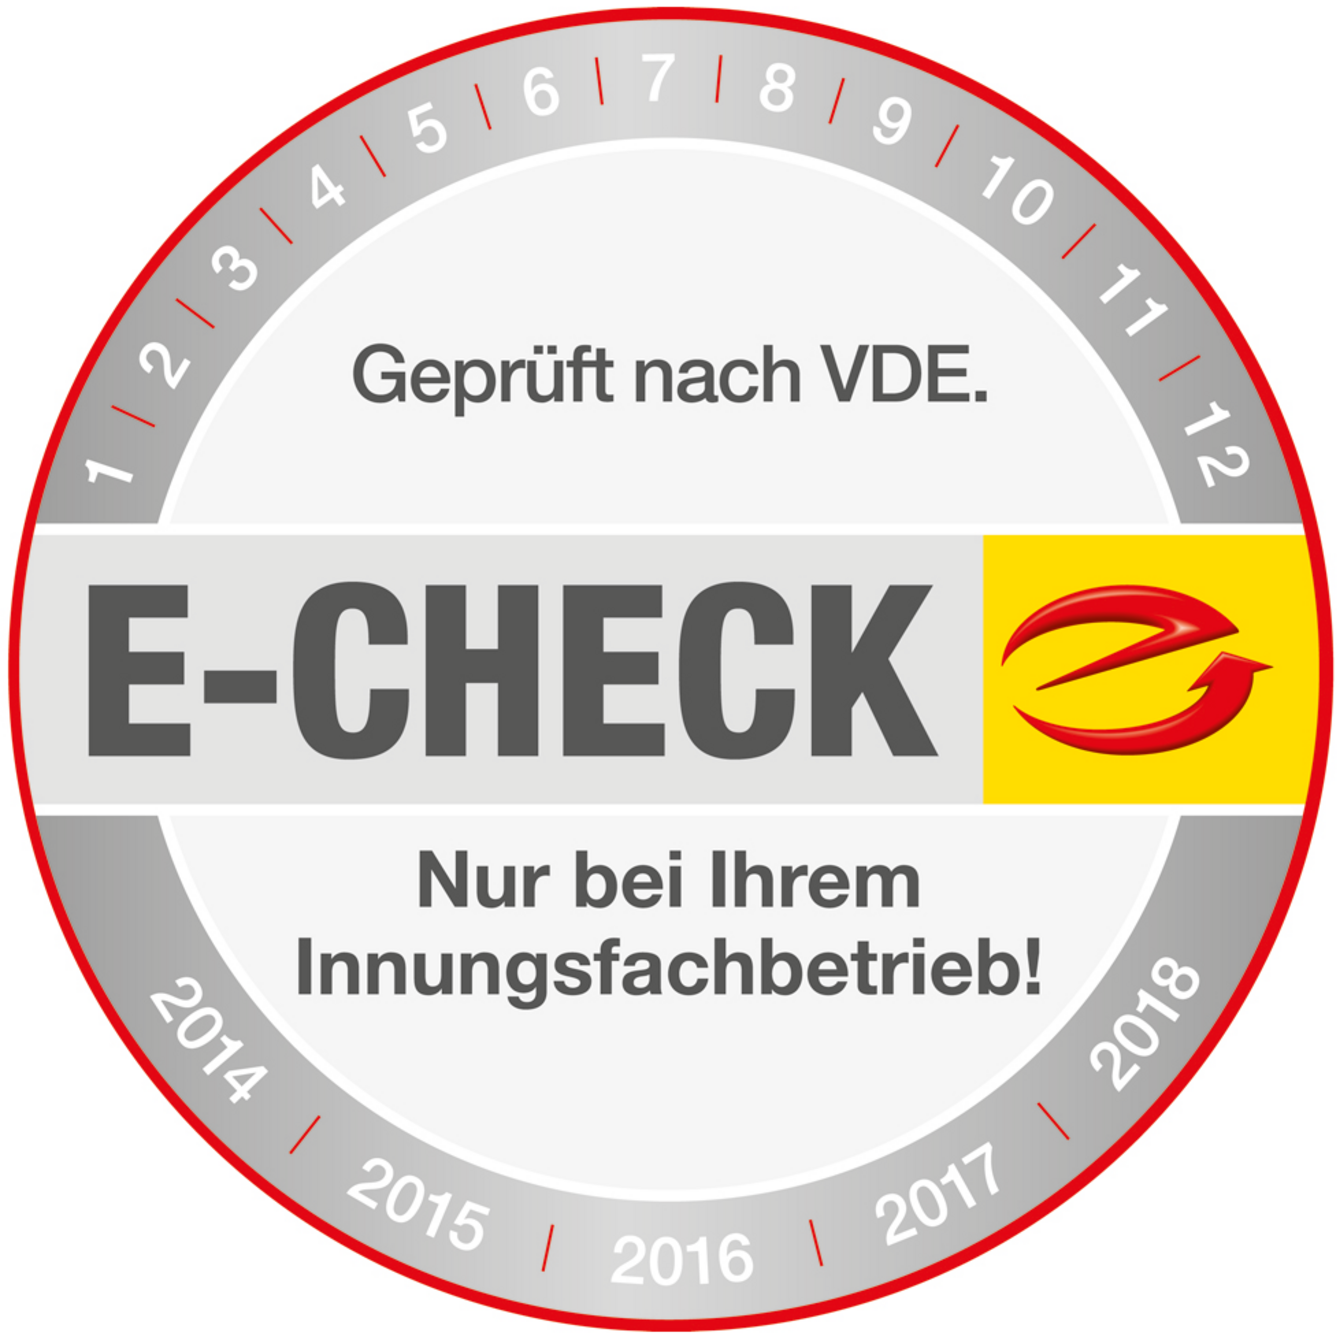 Der E-Check bei Elektro-Technik Herold in Weismain